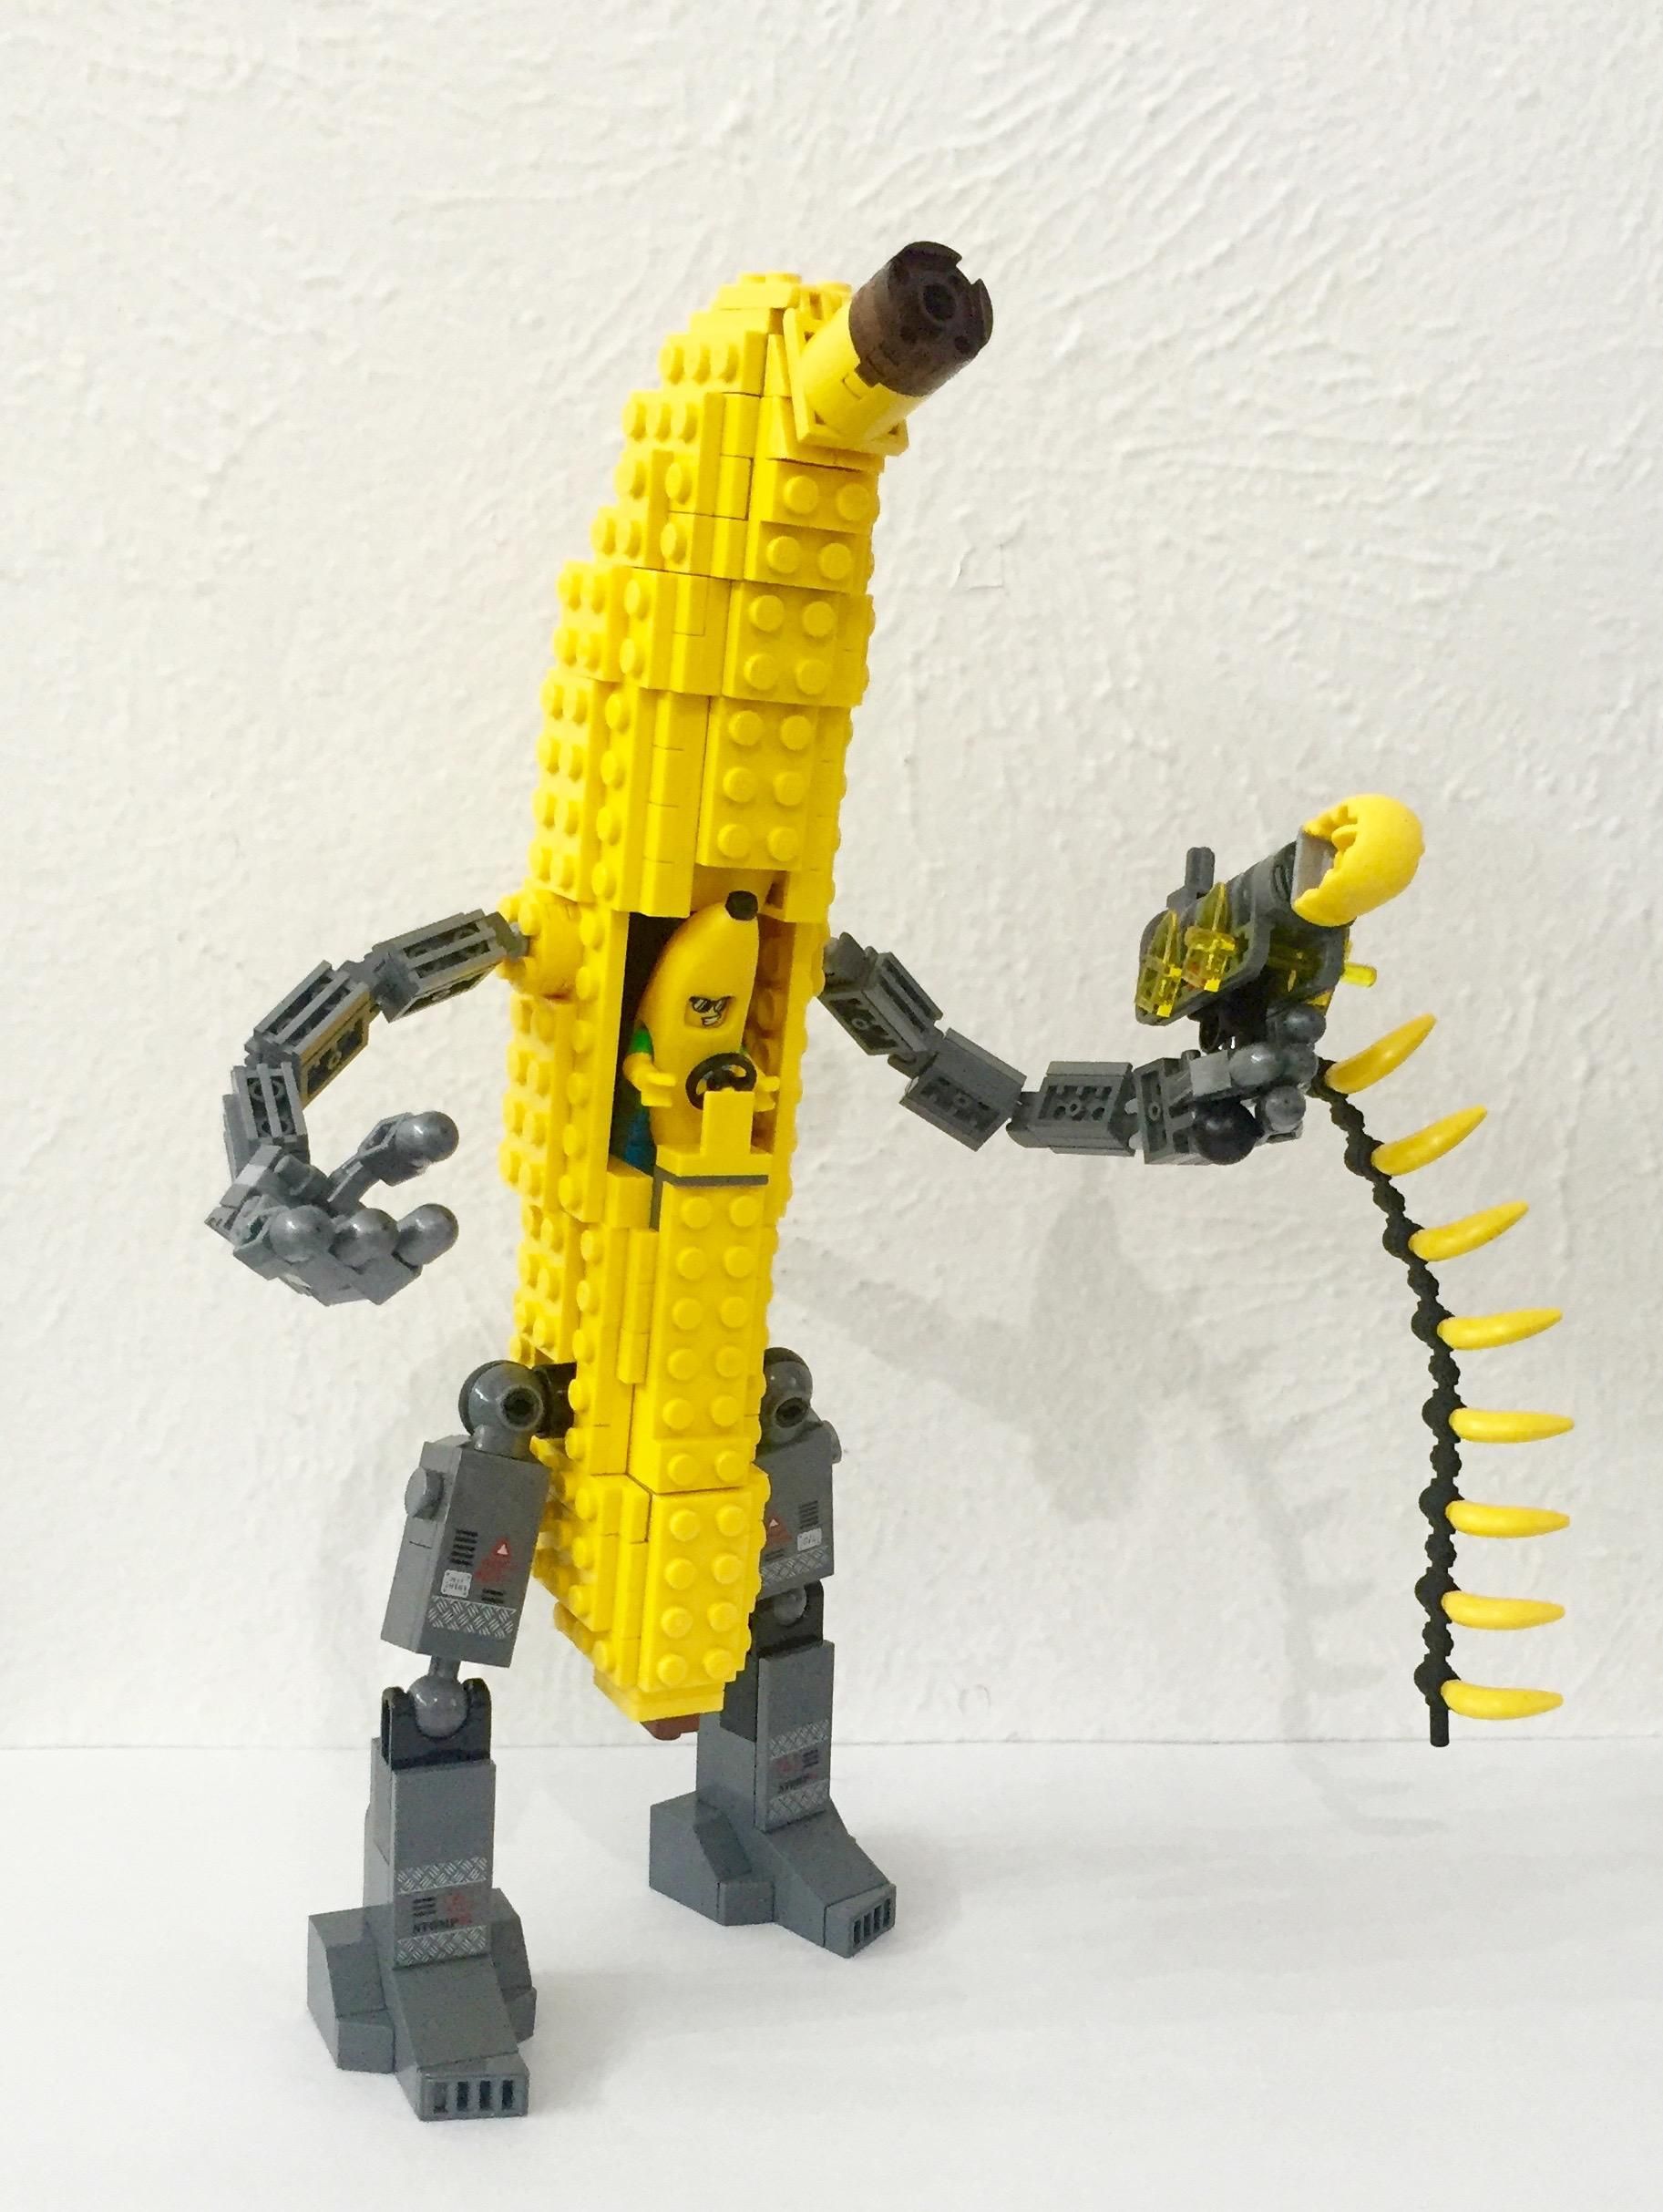 Lego Man in Banana Suit piloting Banana Mecha shooting bananas for scale - Lego CMF 16 Mecha series